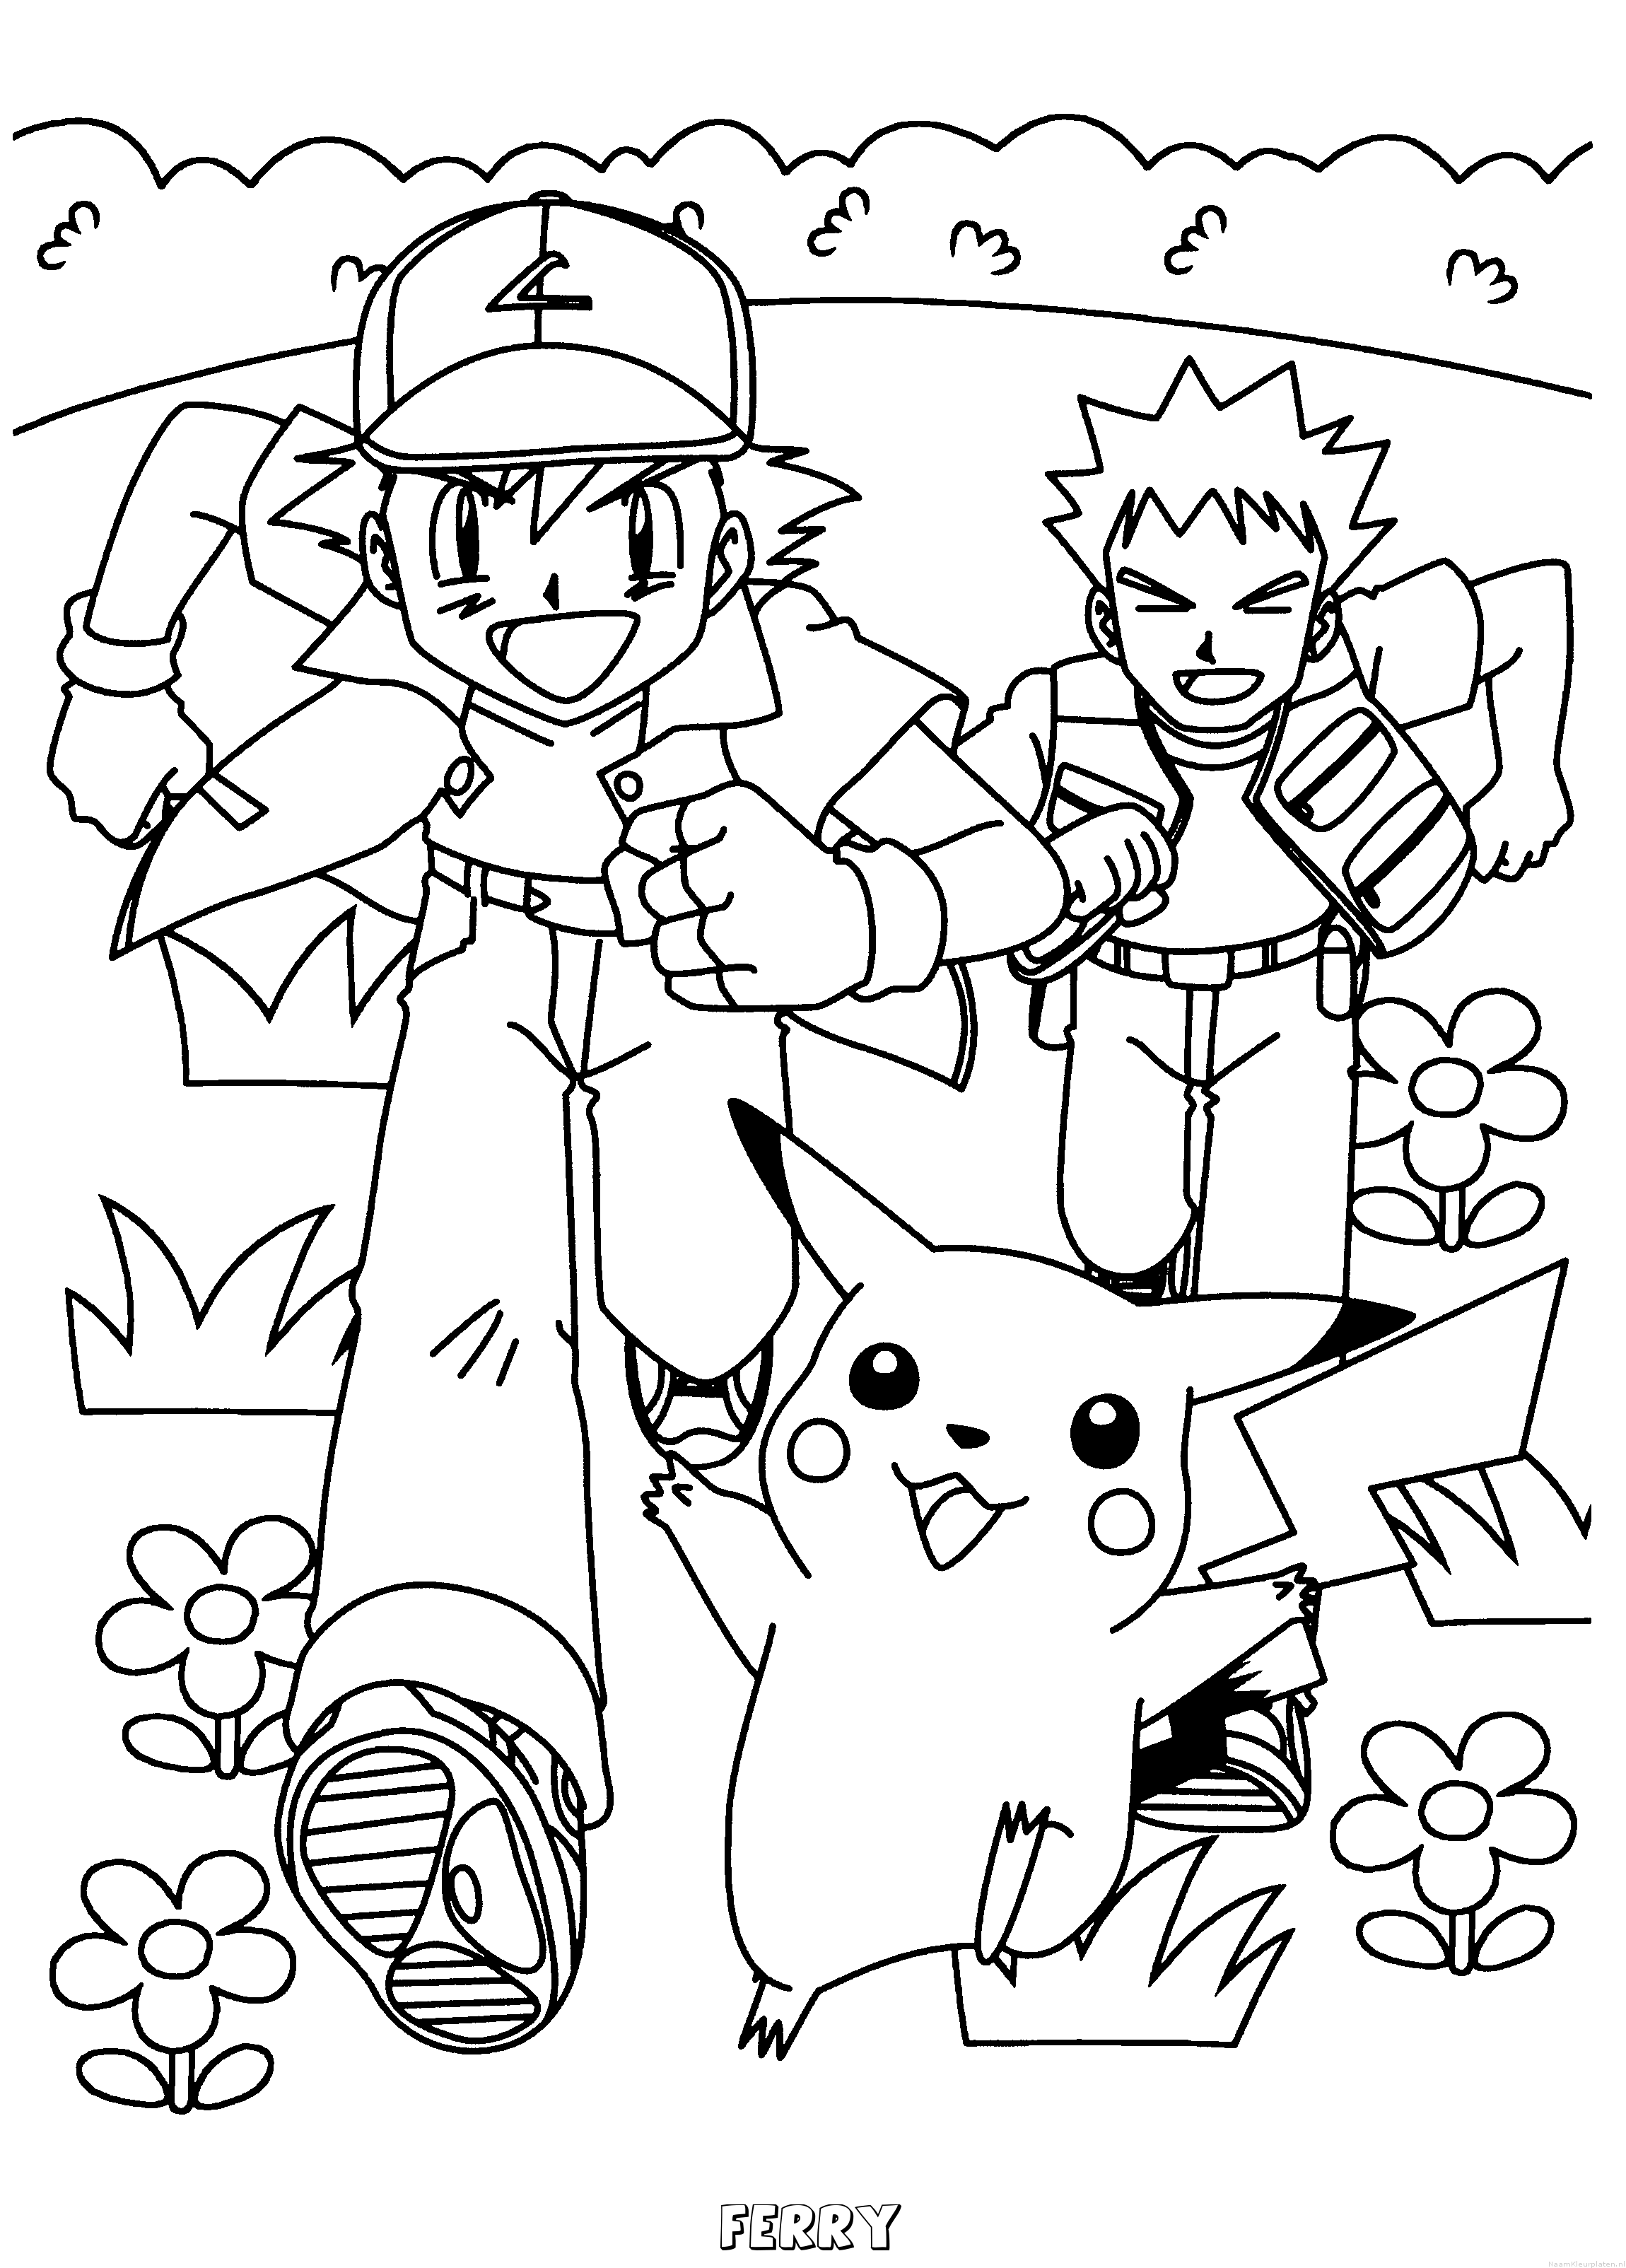 Ferry pokemon